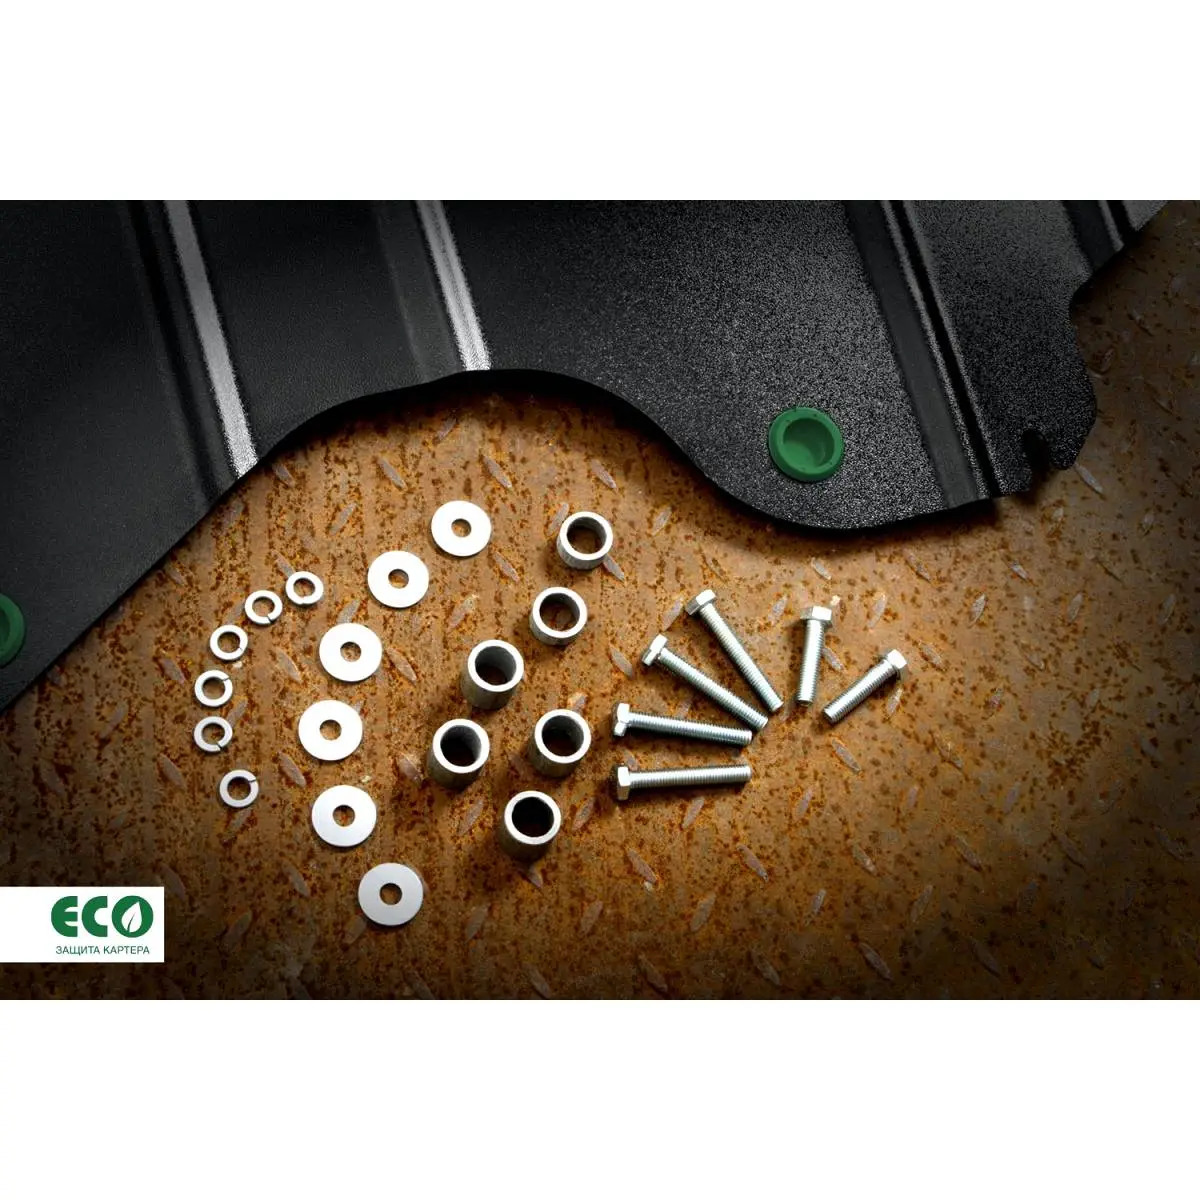 Комплект защиты картера и крепеж Eco VLXLZB0 eco4833020 1437099118 W6H920 7 изображение 4